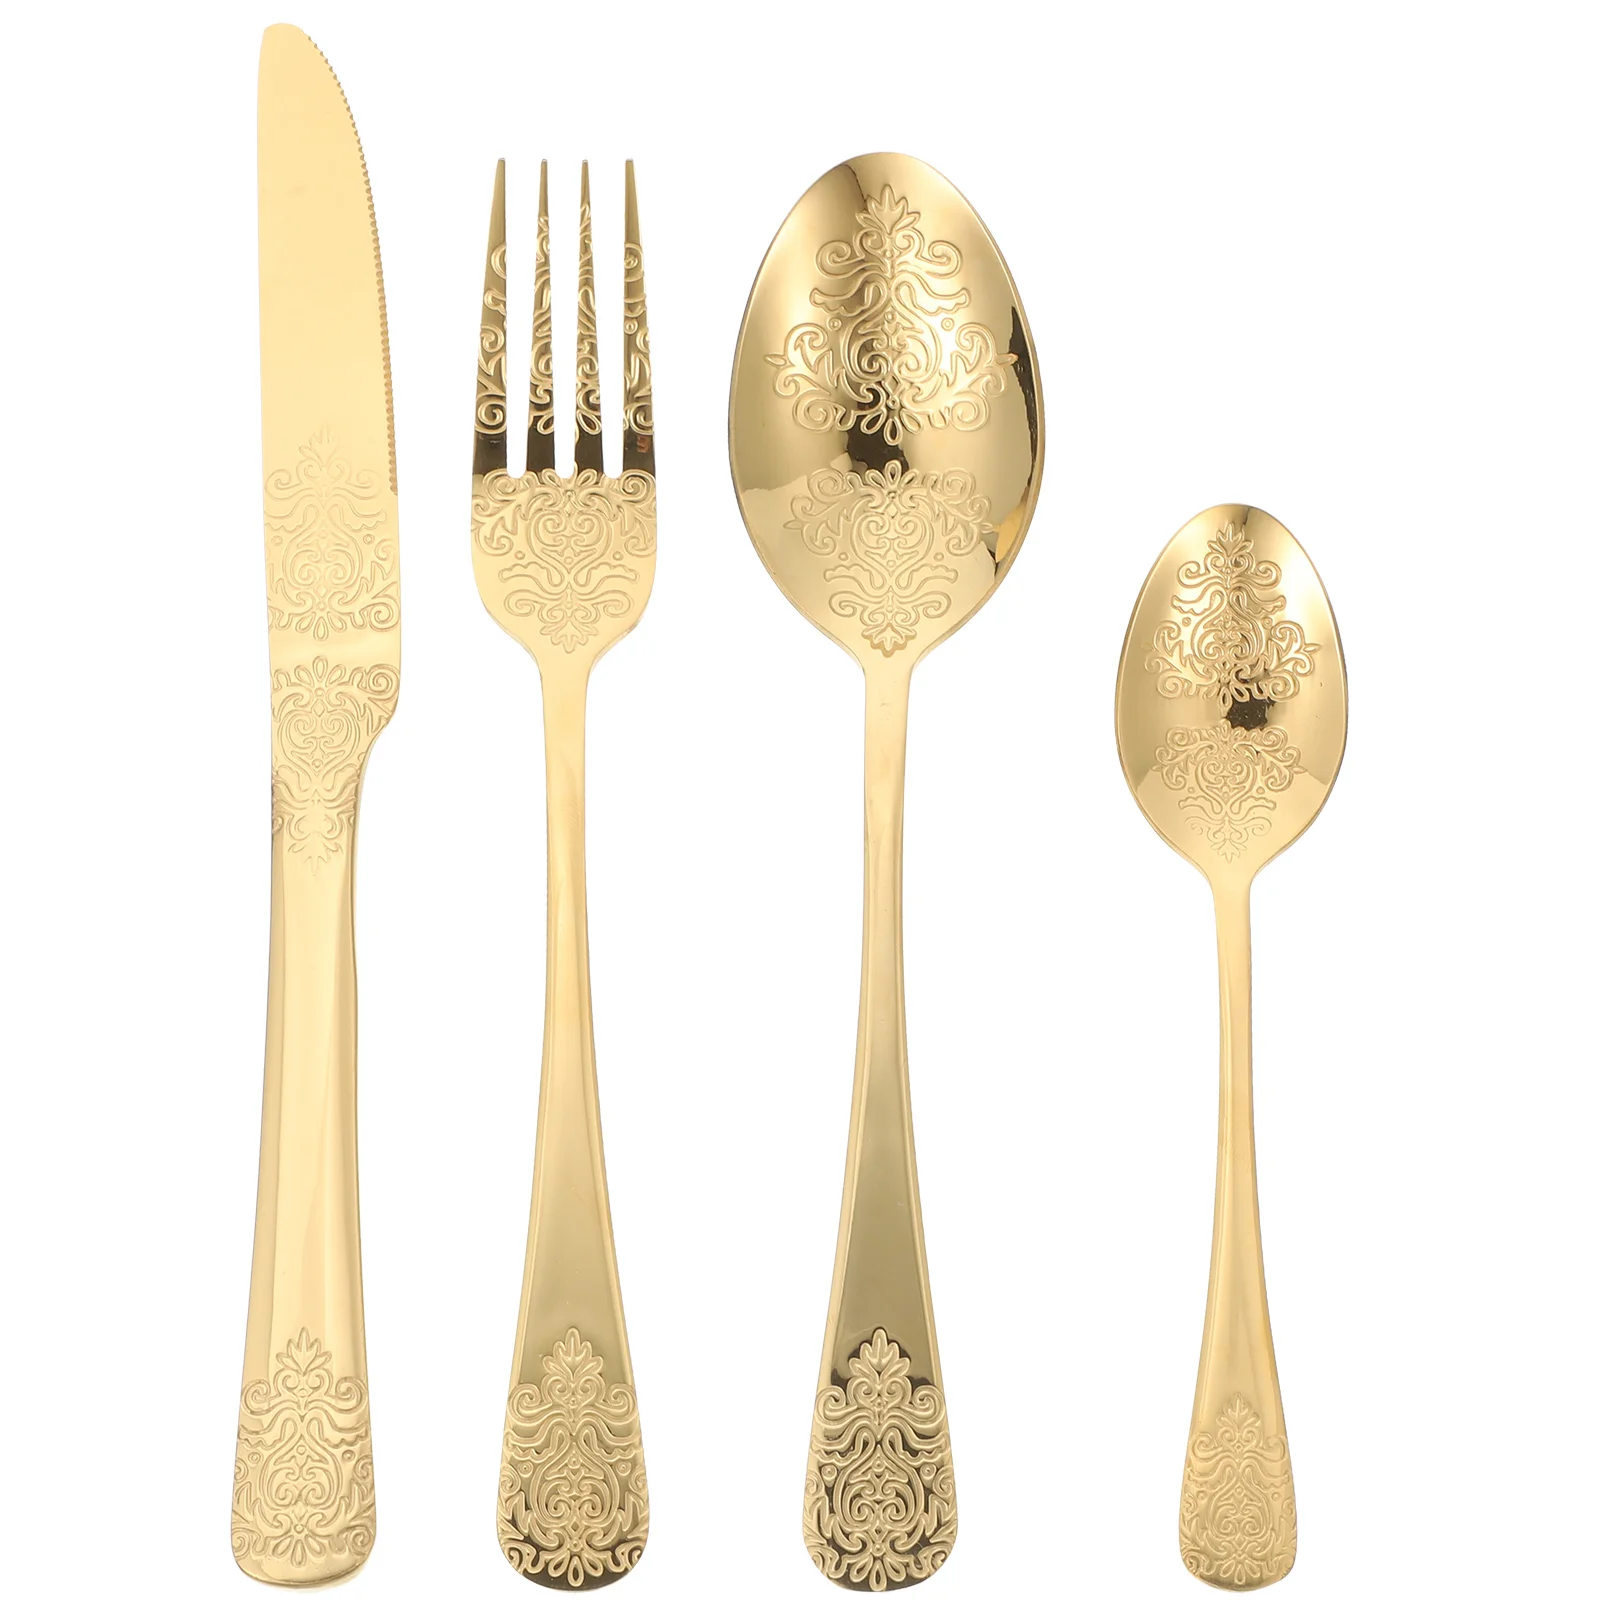 

Set Spoon Gold Flatware Utensils Fork Salad Serving Tableware Wedding Dessert Butter Steel Cutlery Golden Silverware Stainless